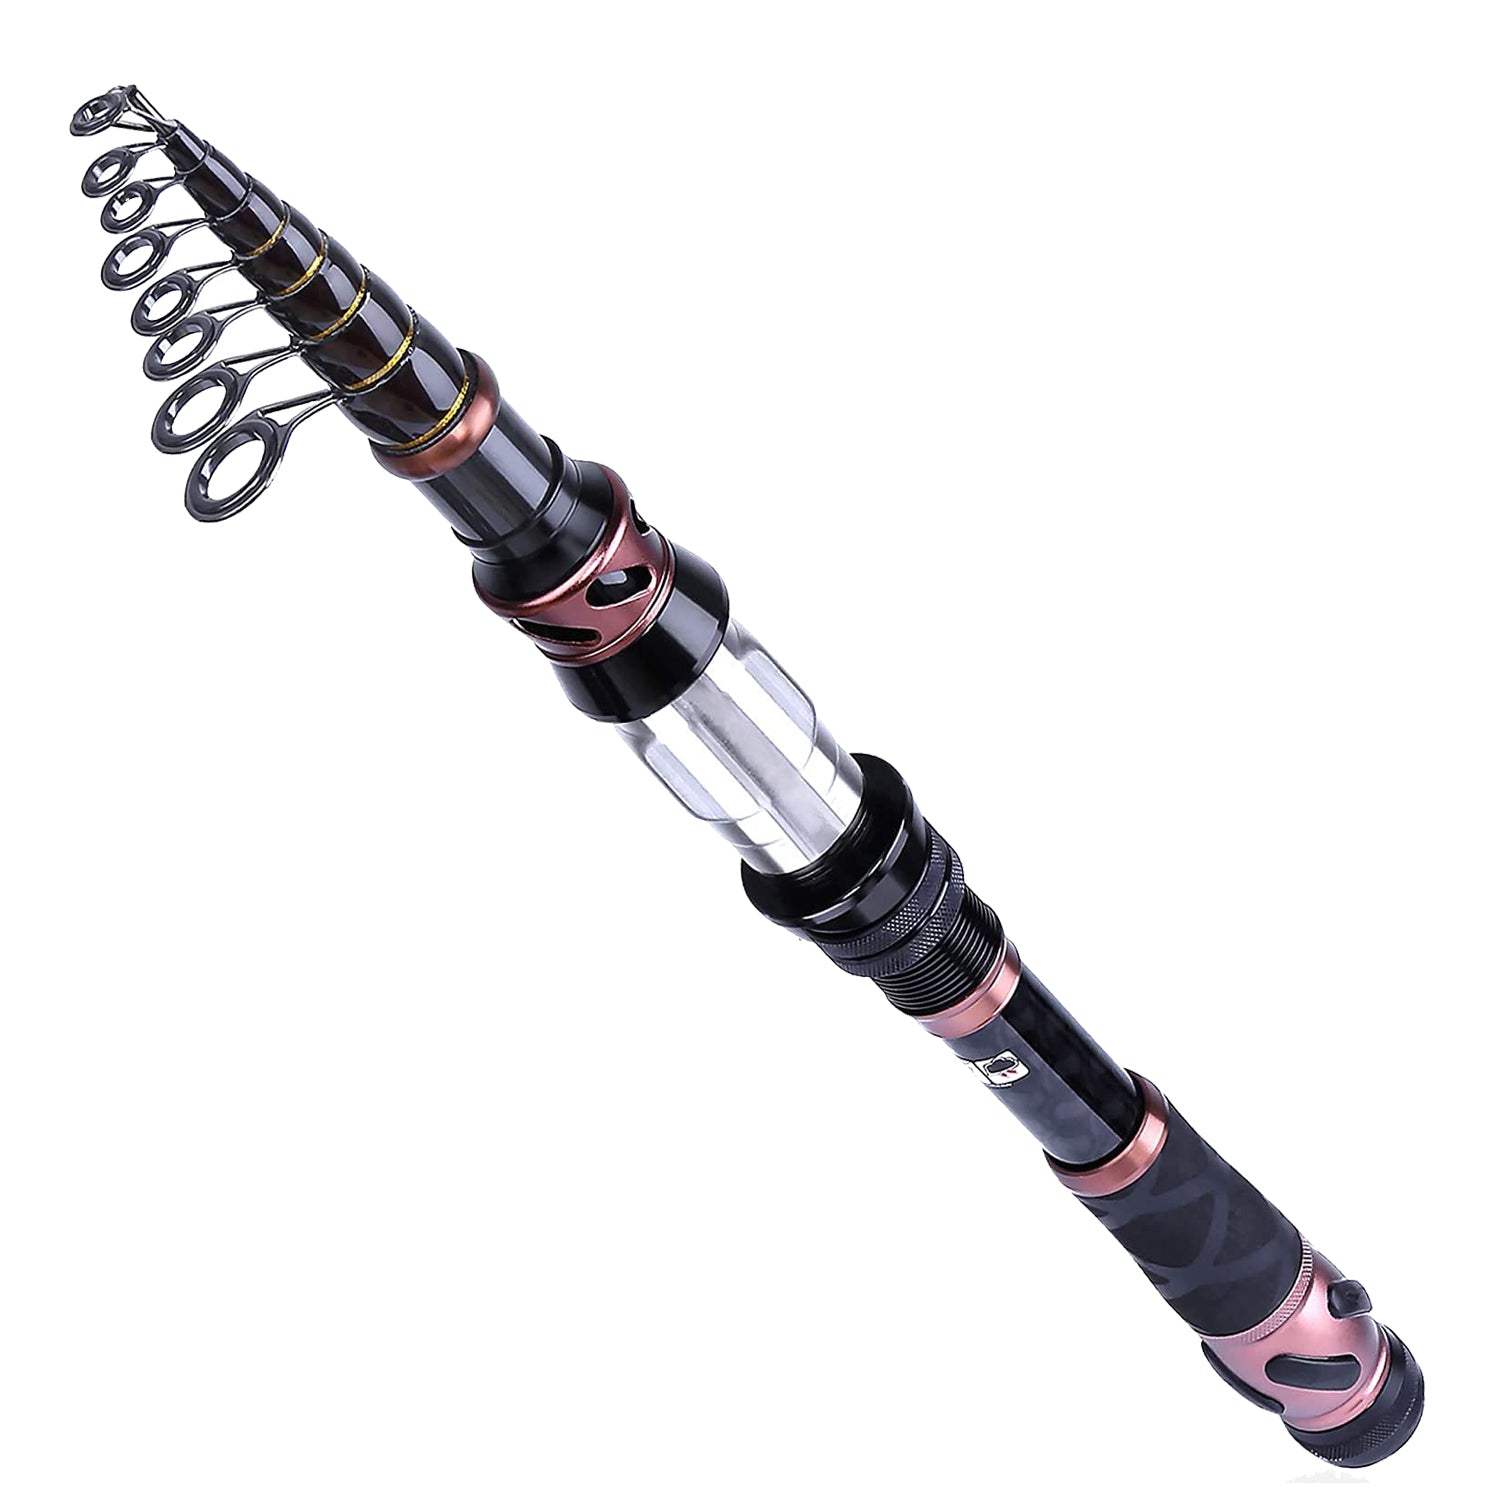  plplaaoo Fishing Rod Kit,Carbon Fiber Casting Rod